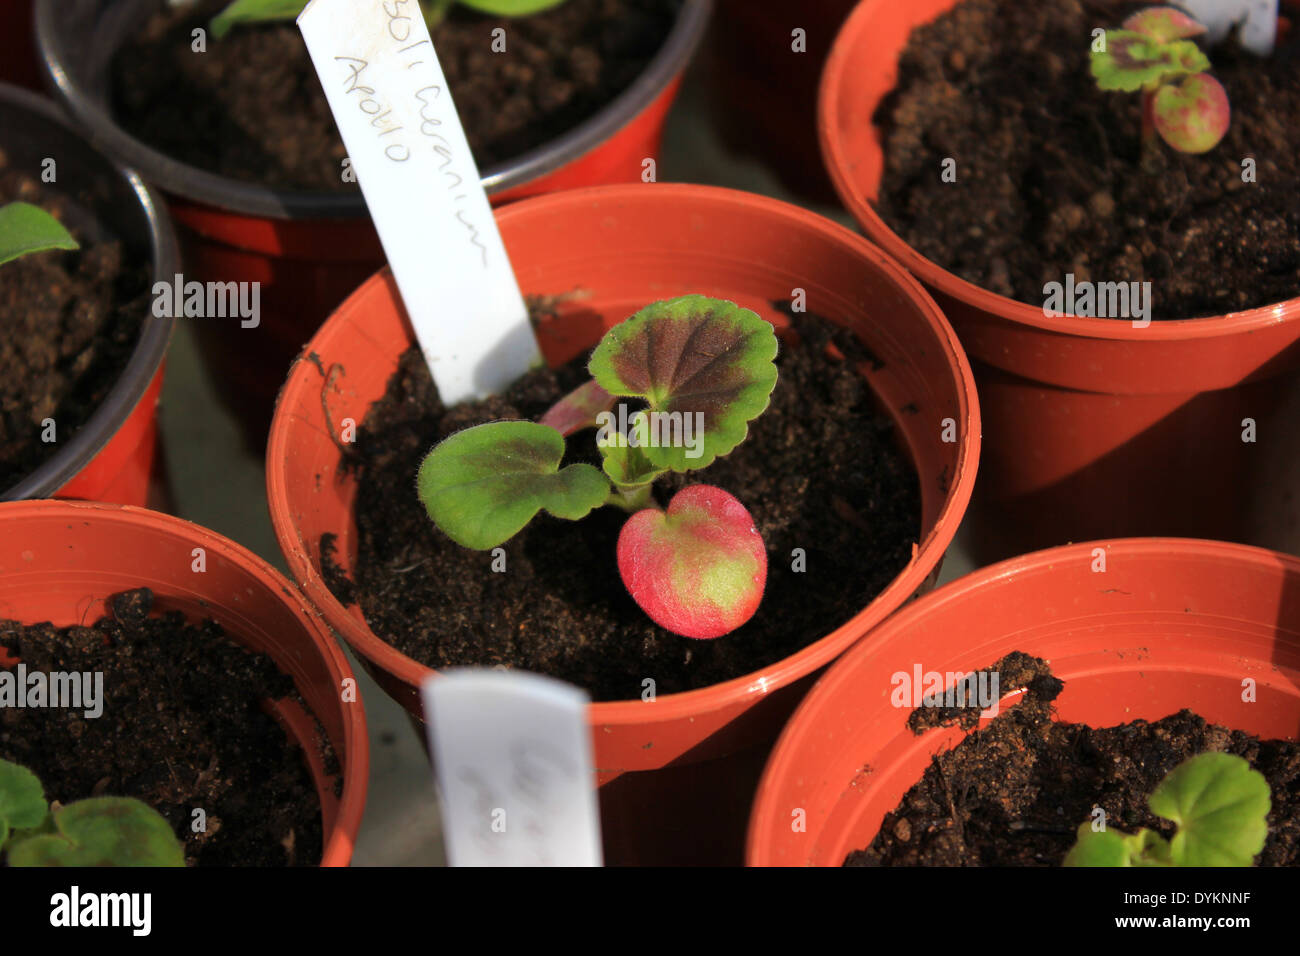 Geranium seedlings in plastic pots Stock Photo